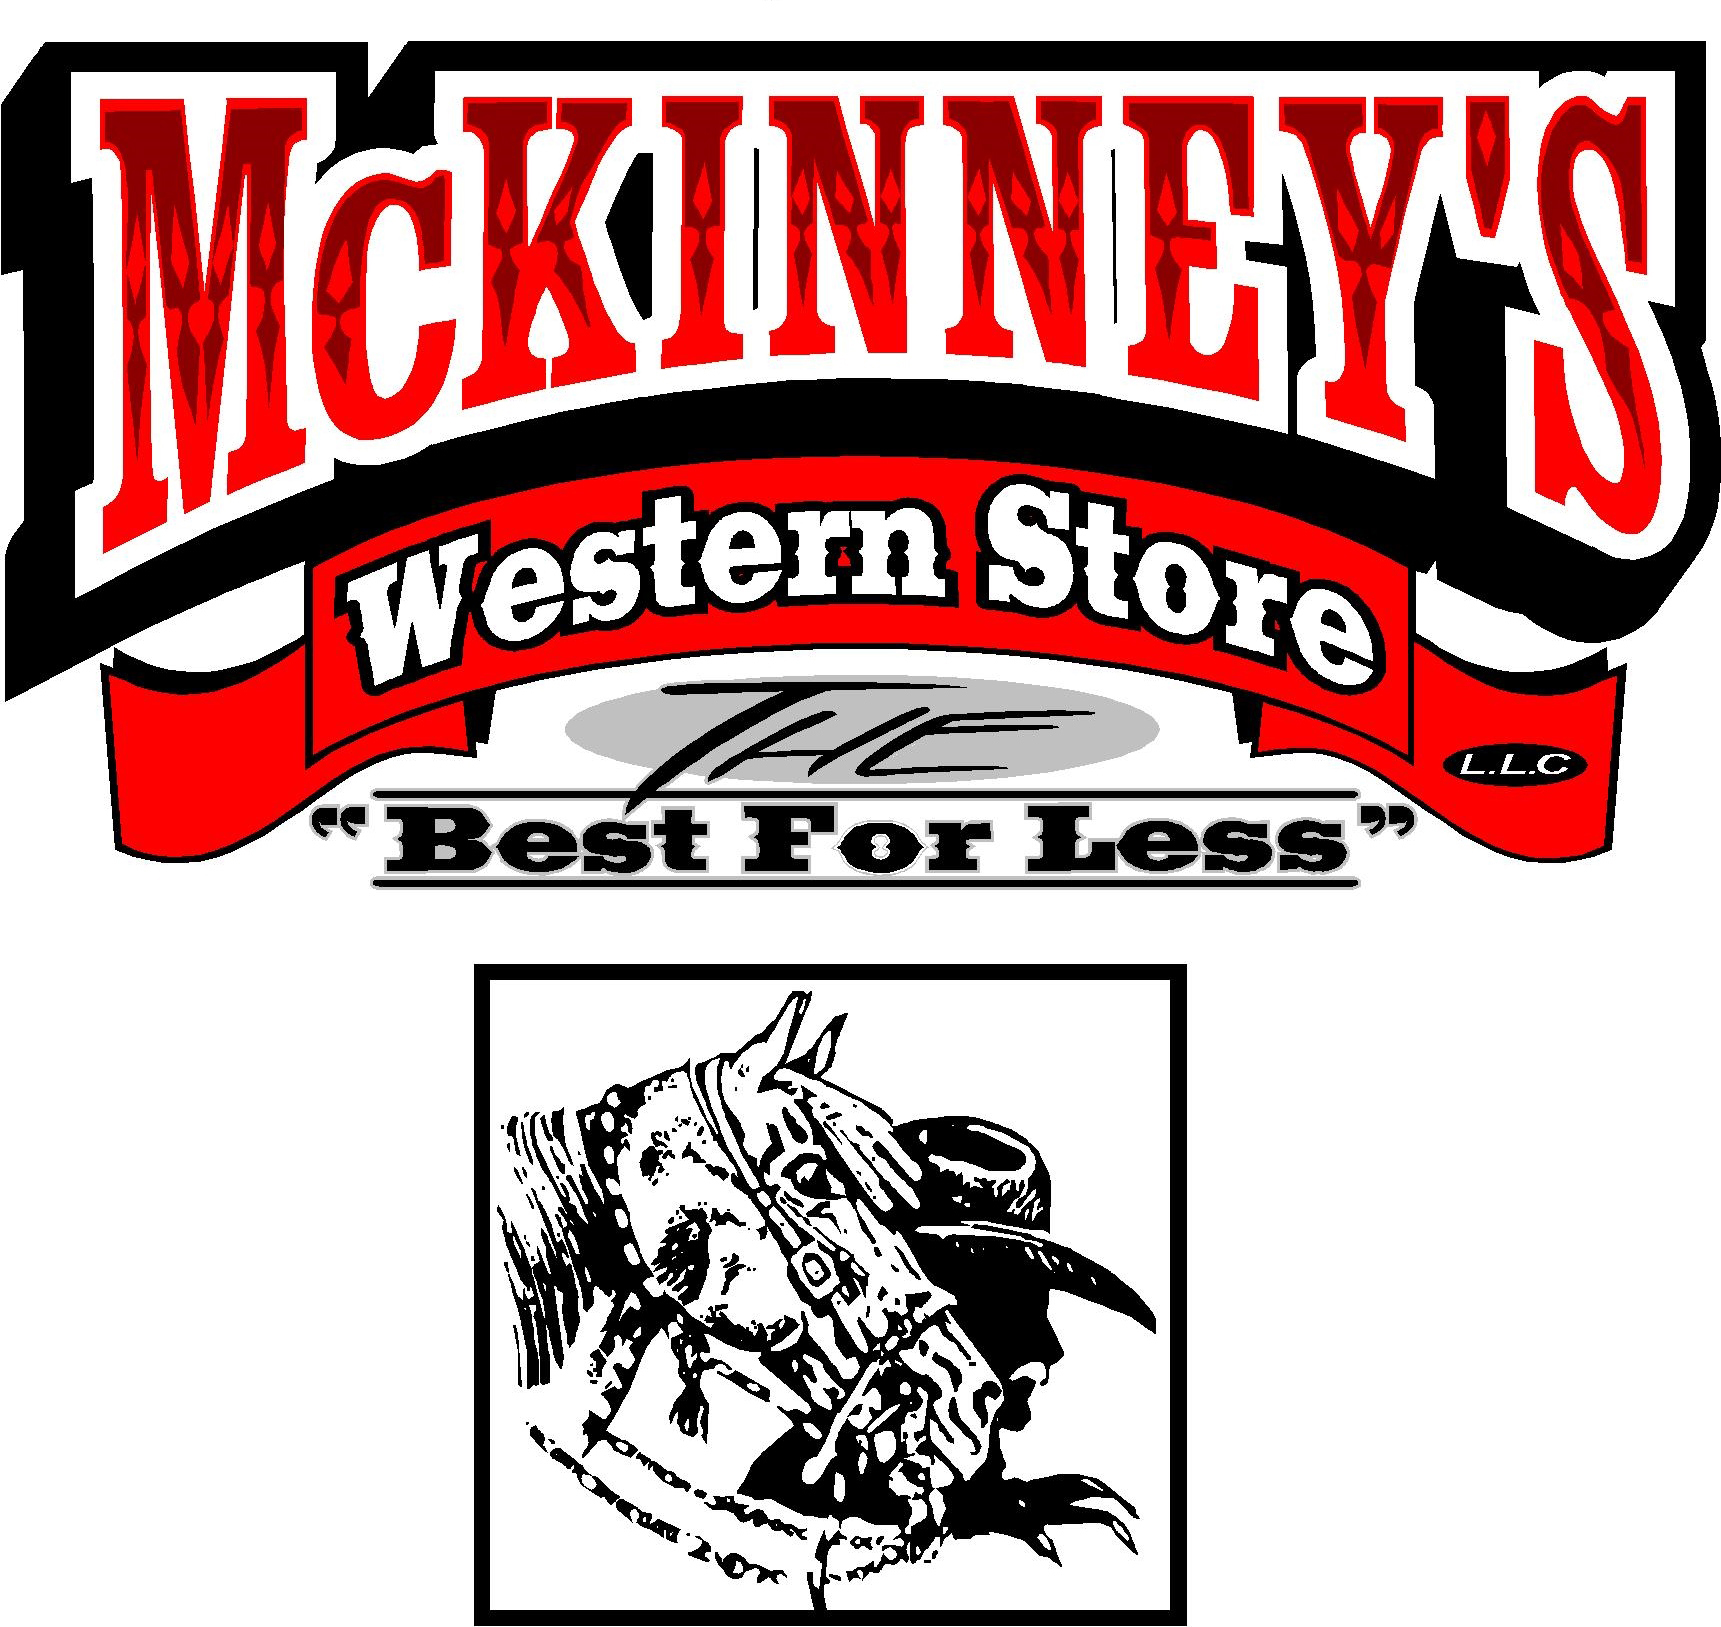 McKinney's Western Store